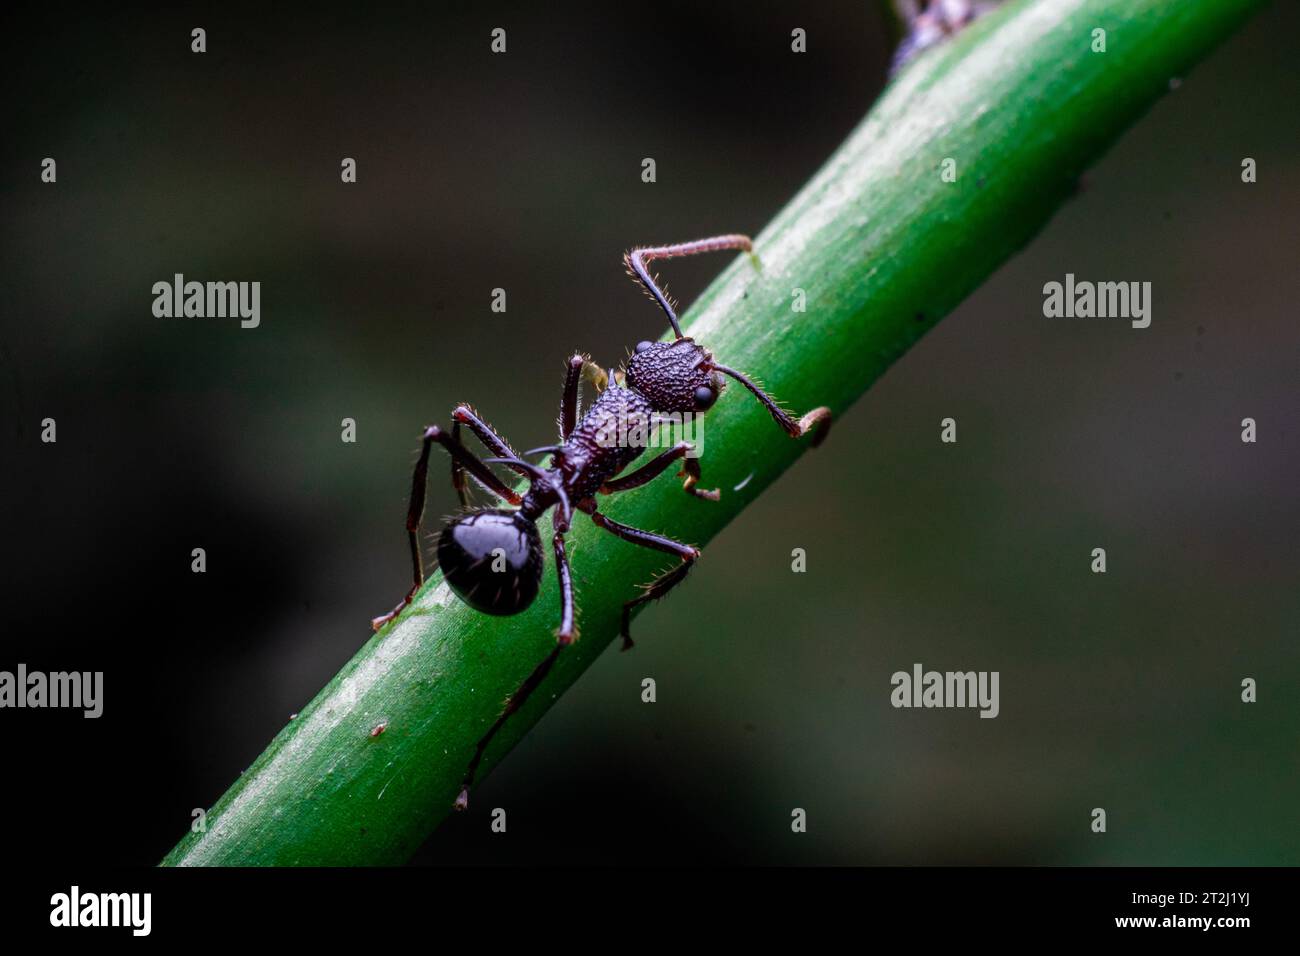 polyrhachis ant on a shrub branch Stock Photo